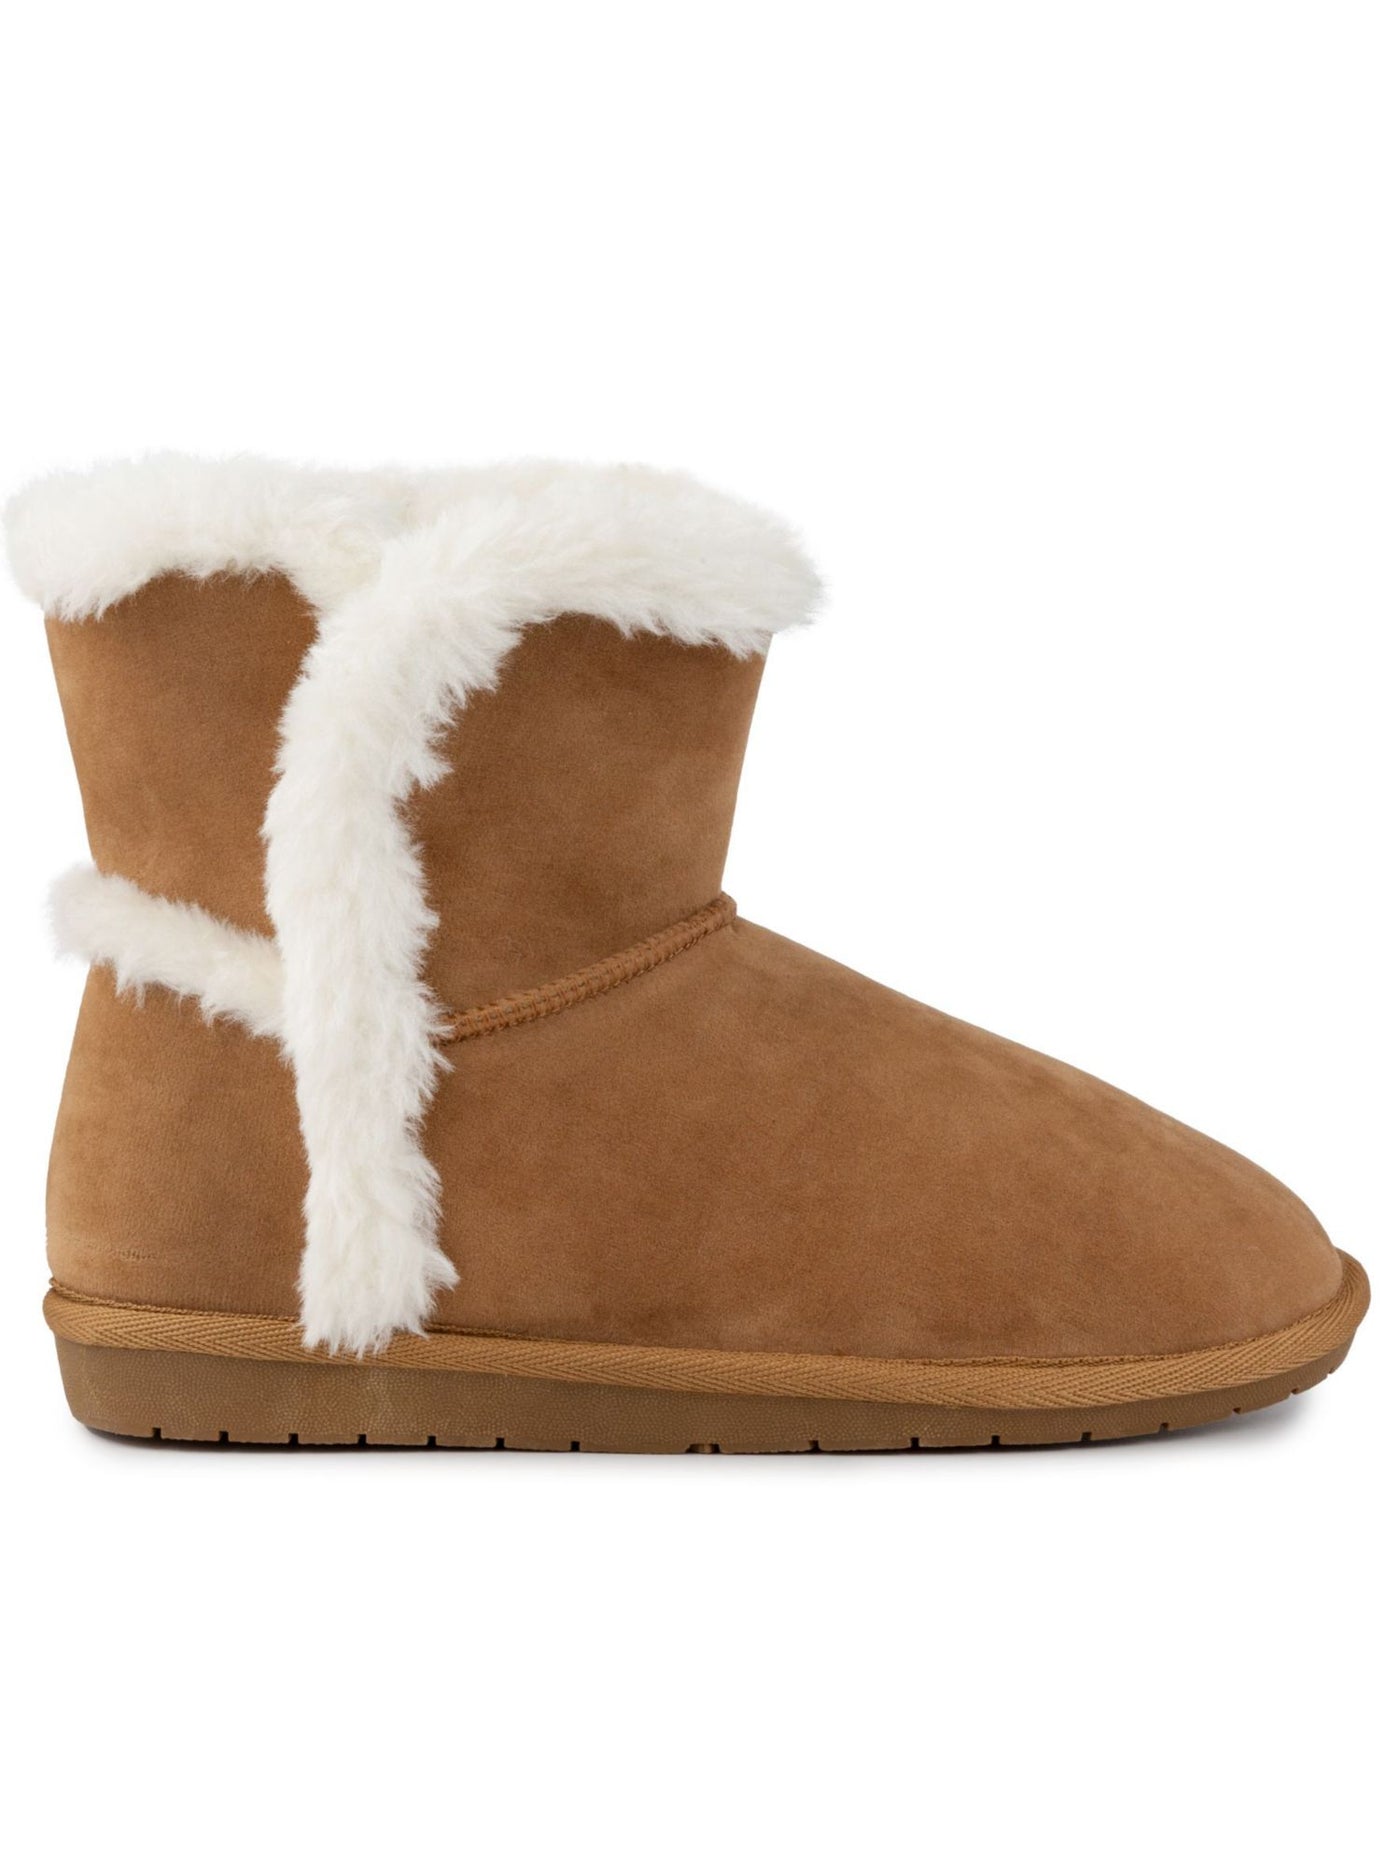 SUGAR Womens Brown Comfort Poppy Round Toe Snow Boots 7 M